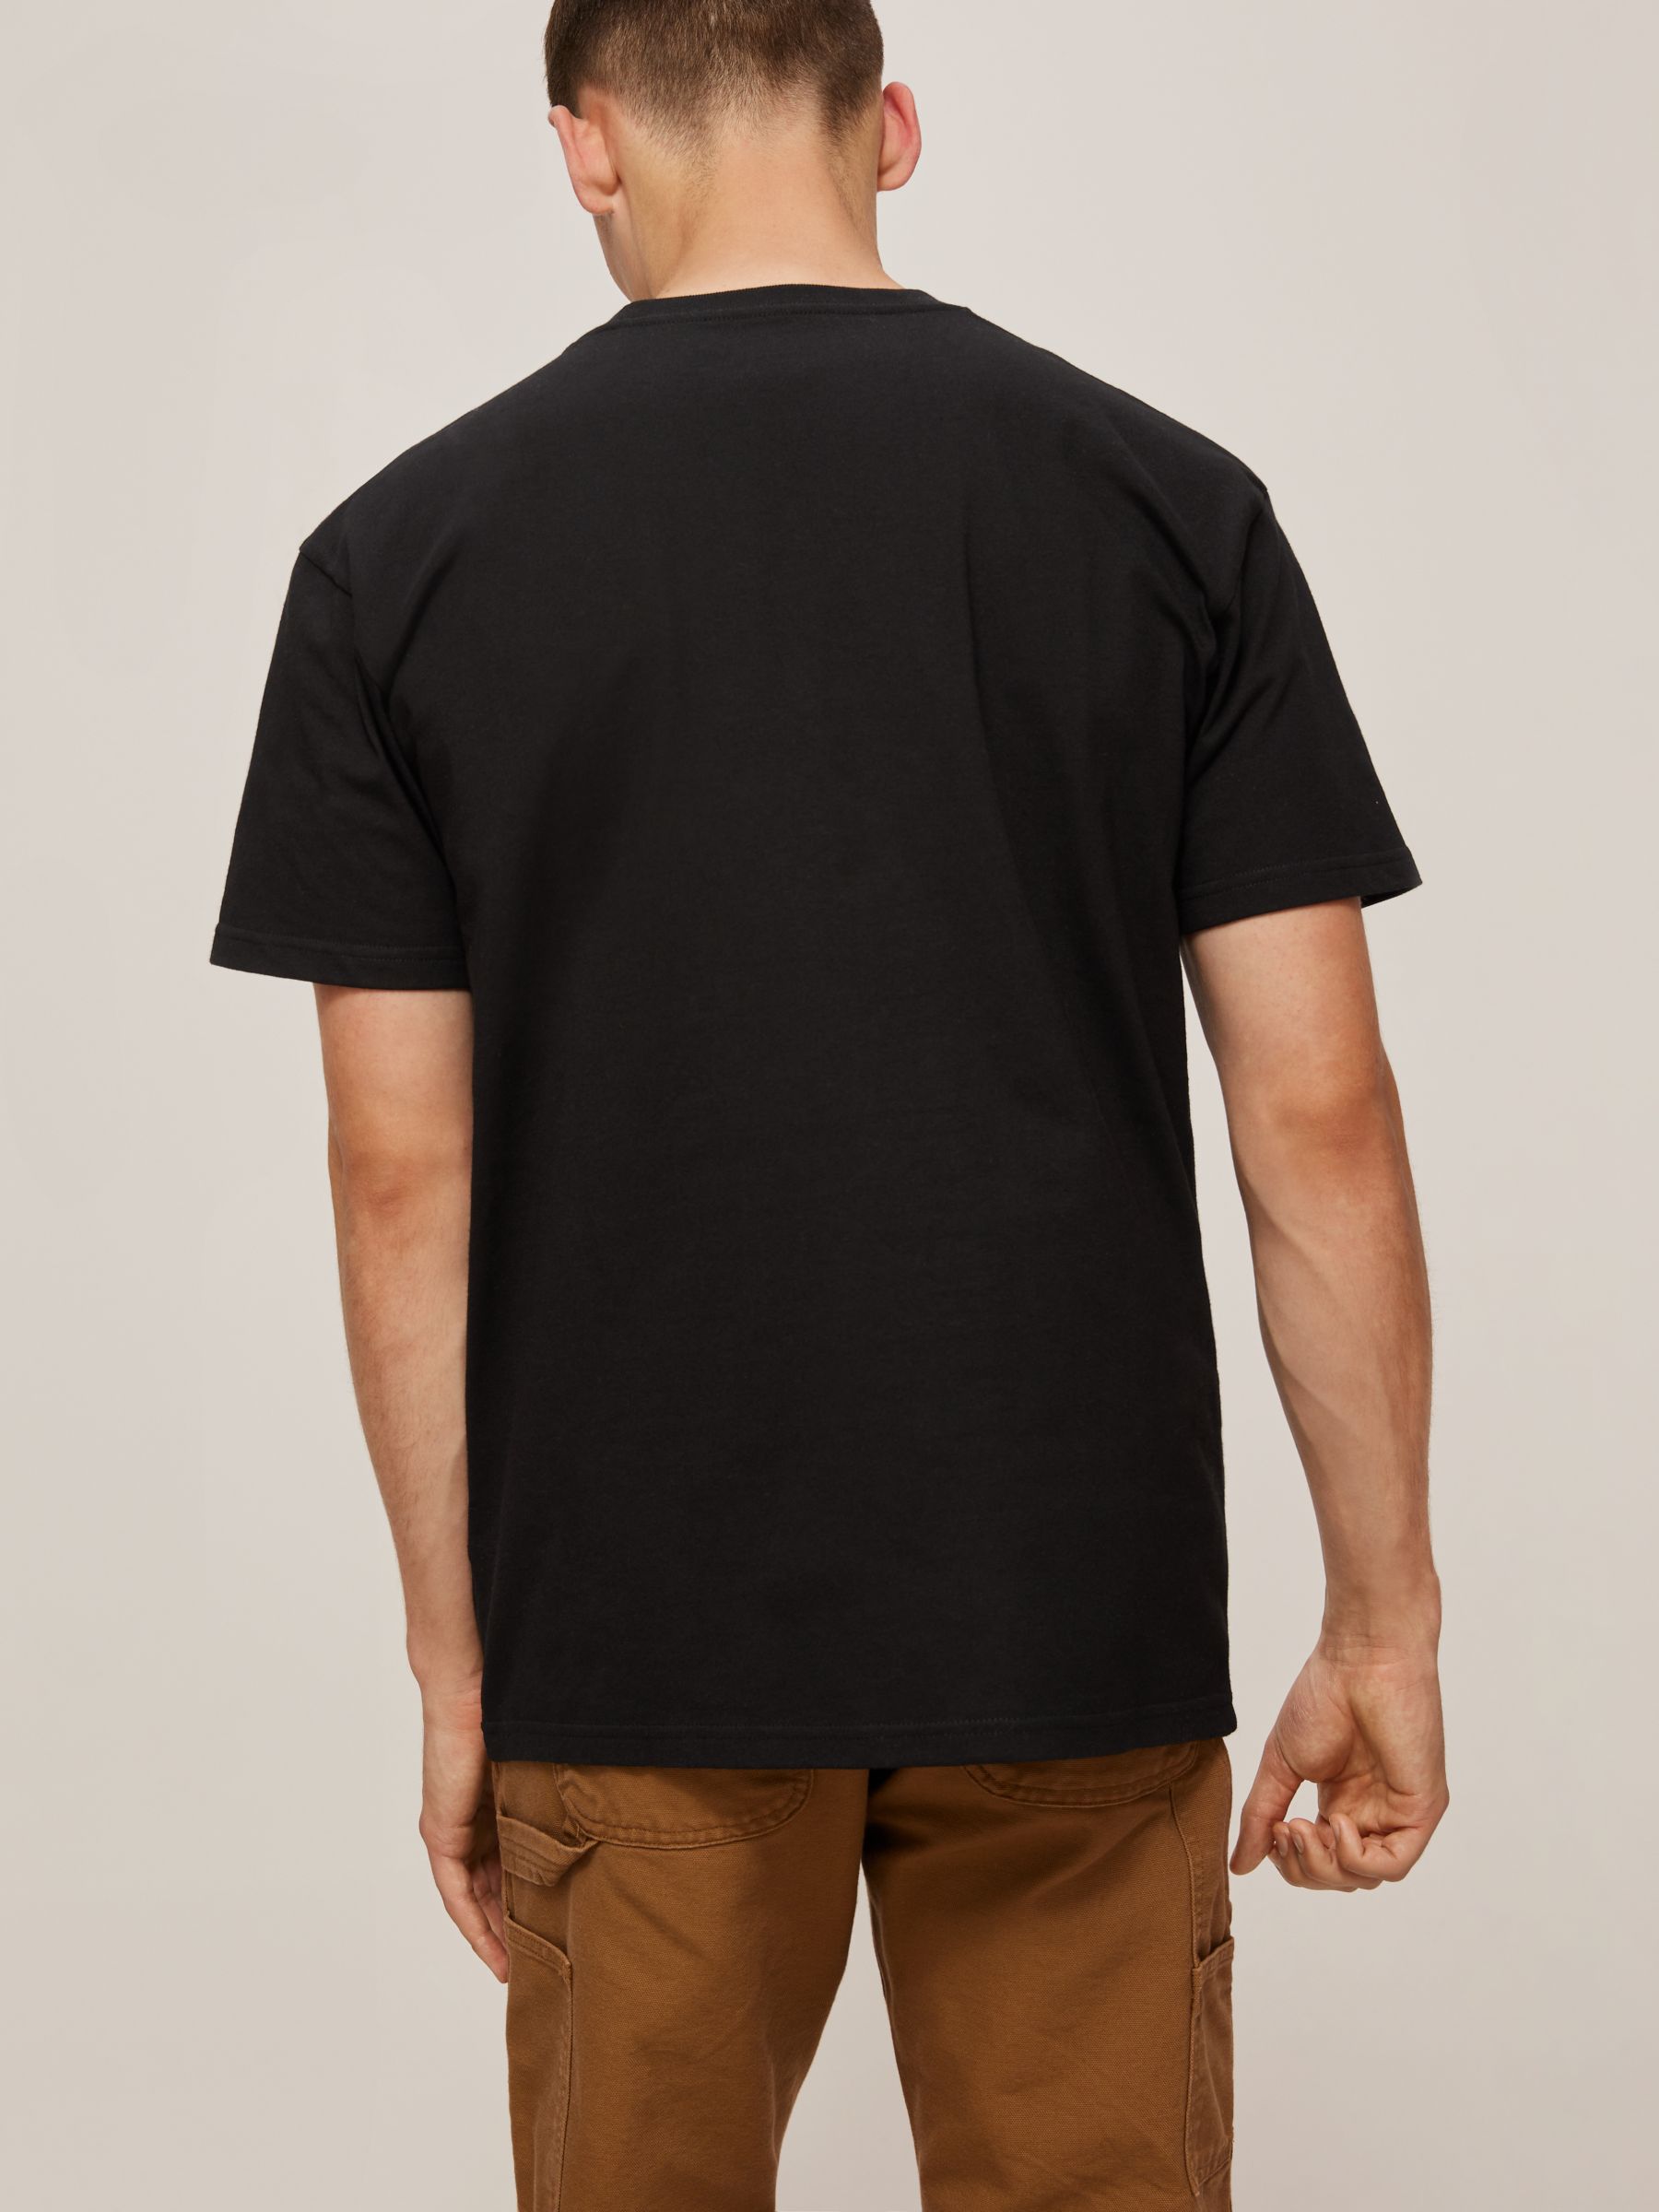 Carhartt WIP Chase Short Sleeve T-Shirt, Black, S